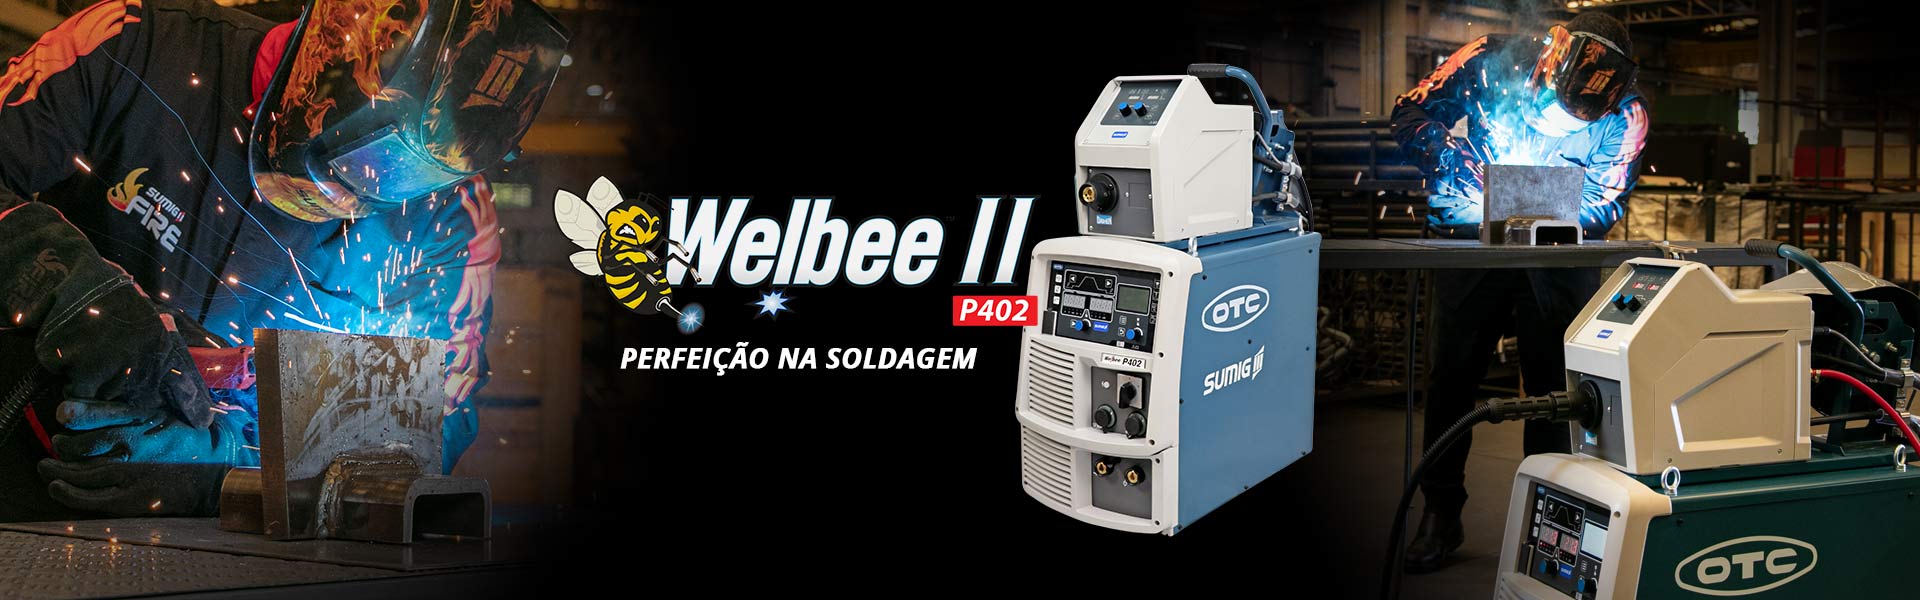 Lançamento Welbee P402